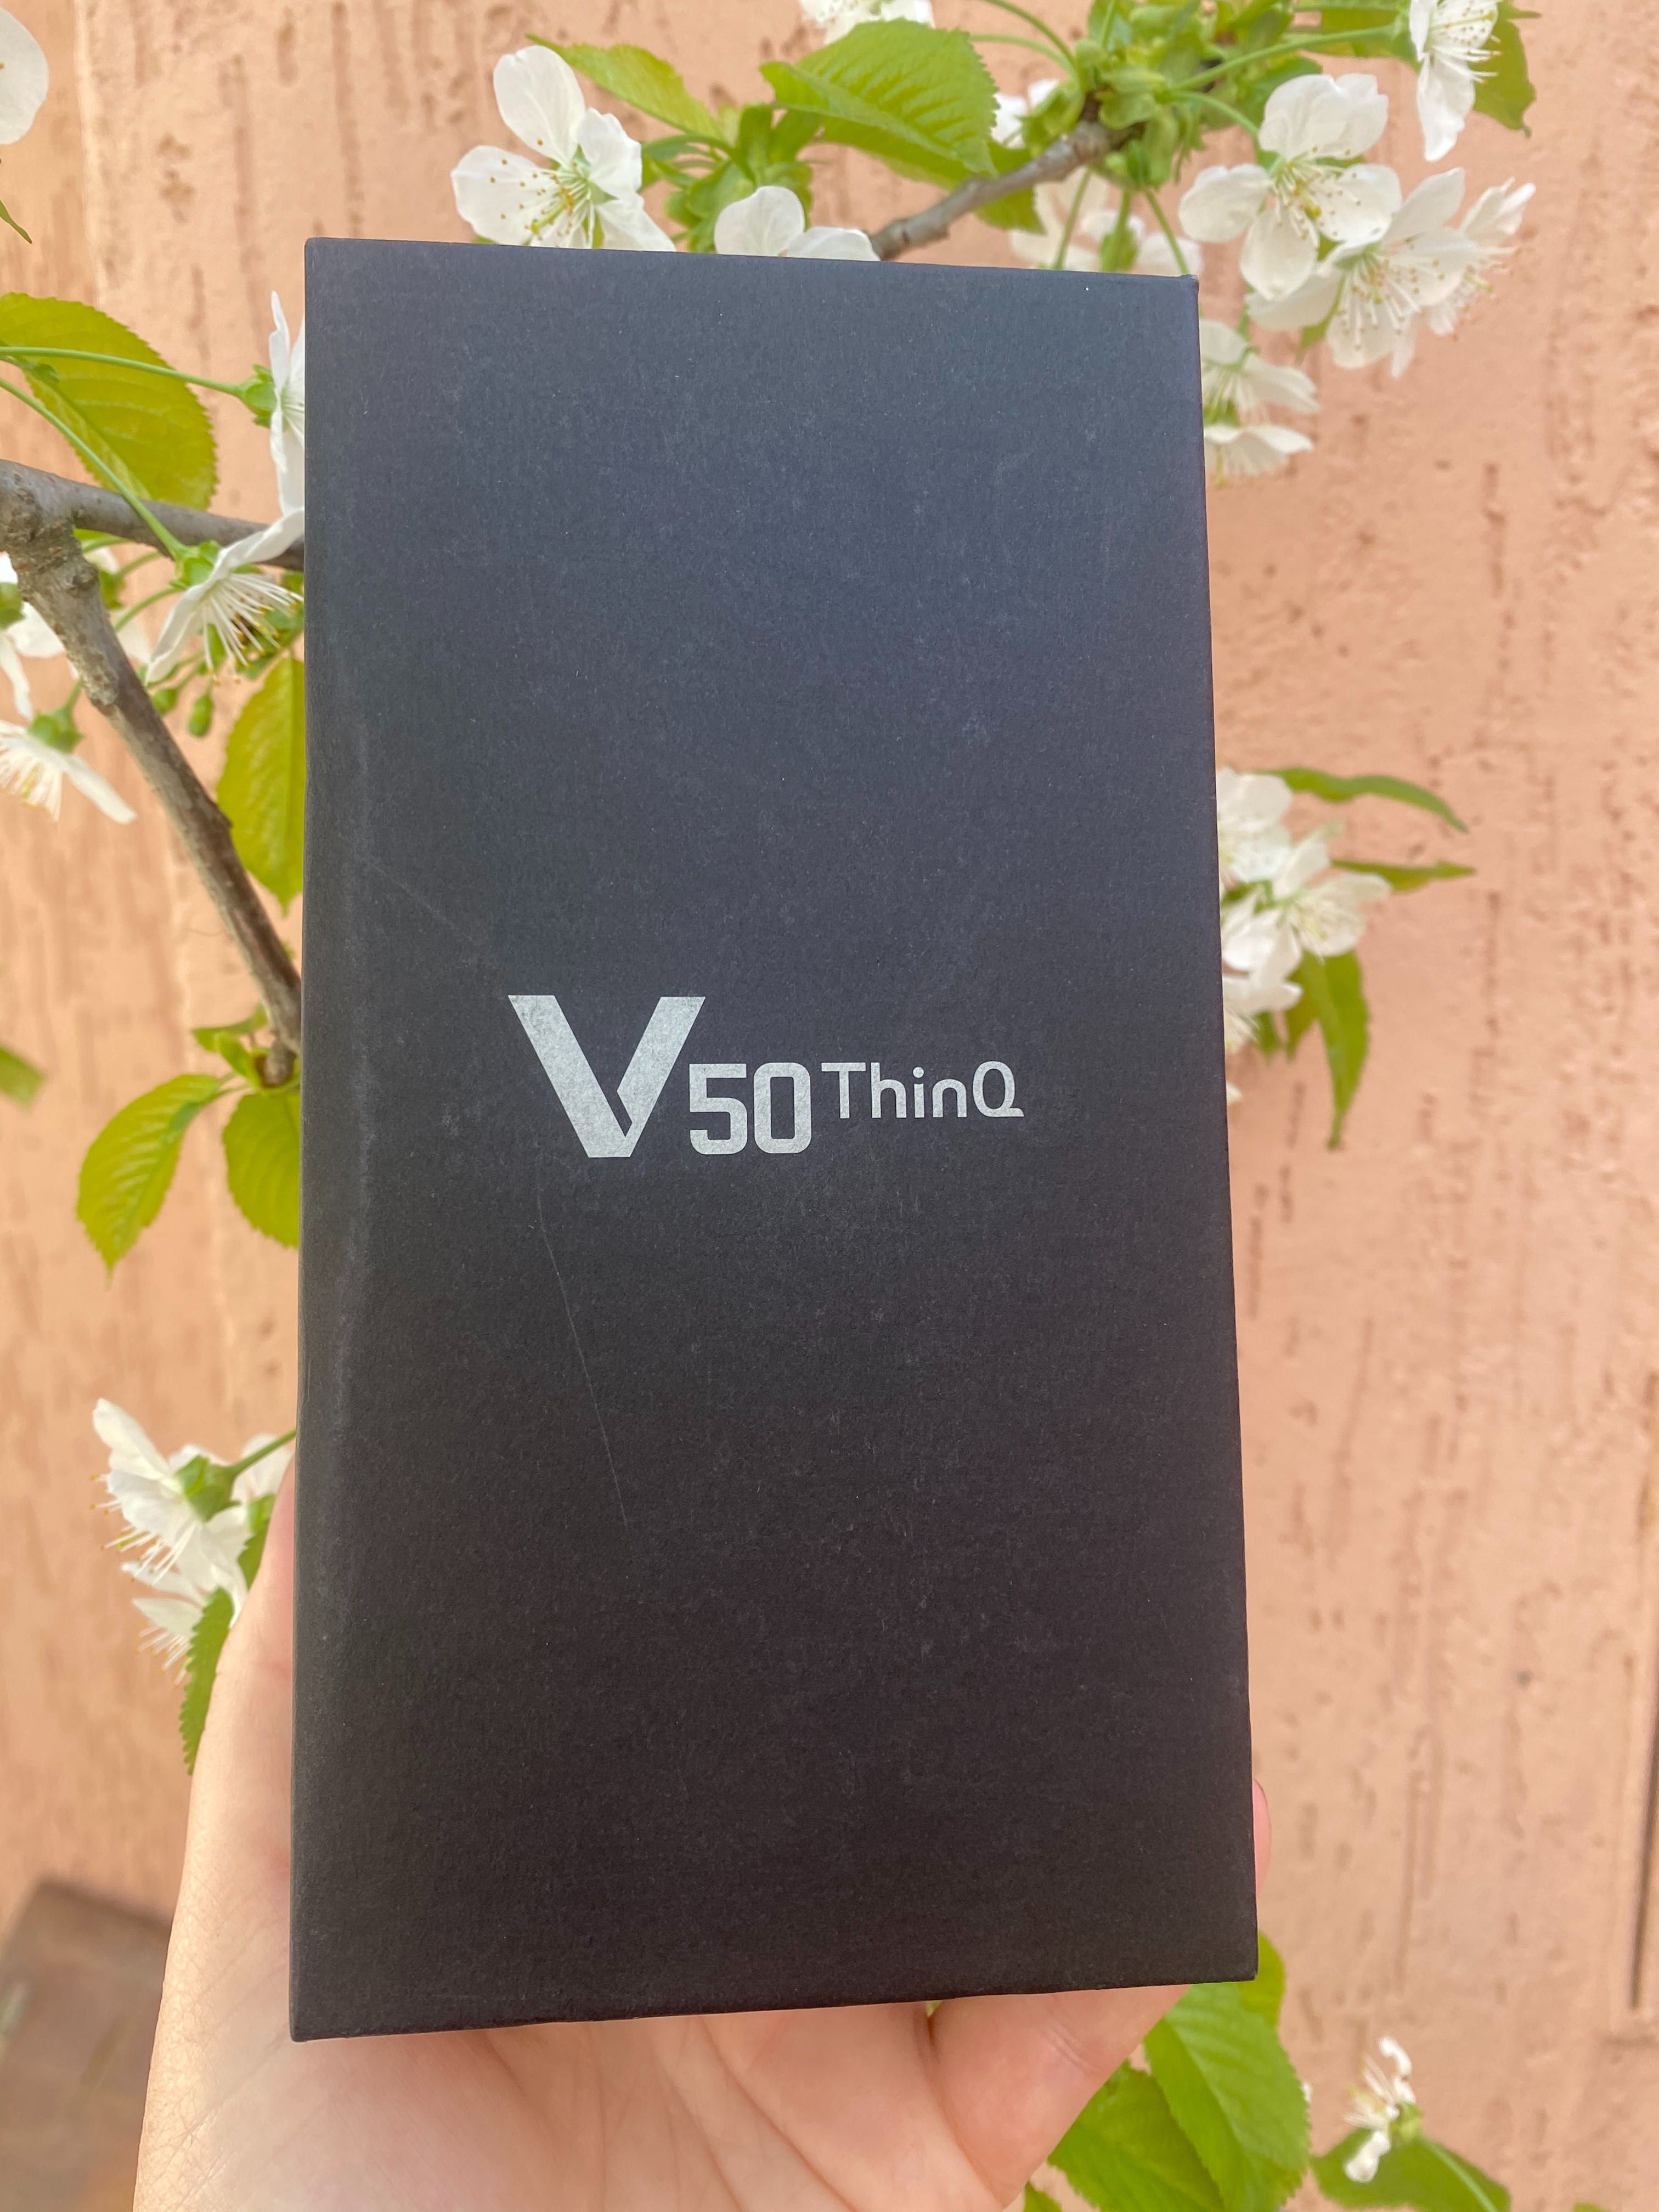 Новий телефон LG V 50 ThinQ Флагман, 6/128 гб! Чохол у подарунок.